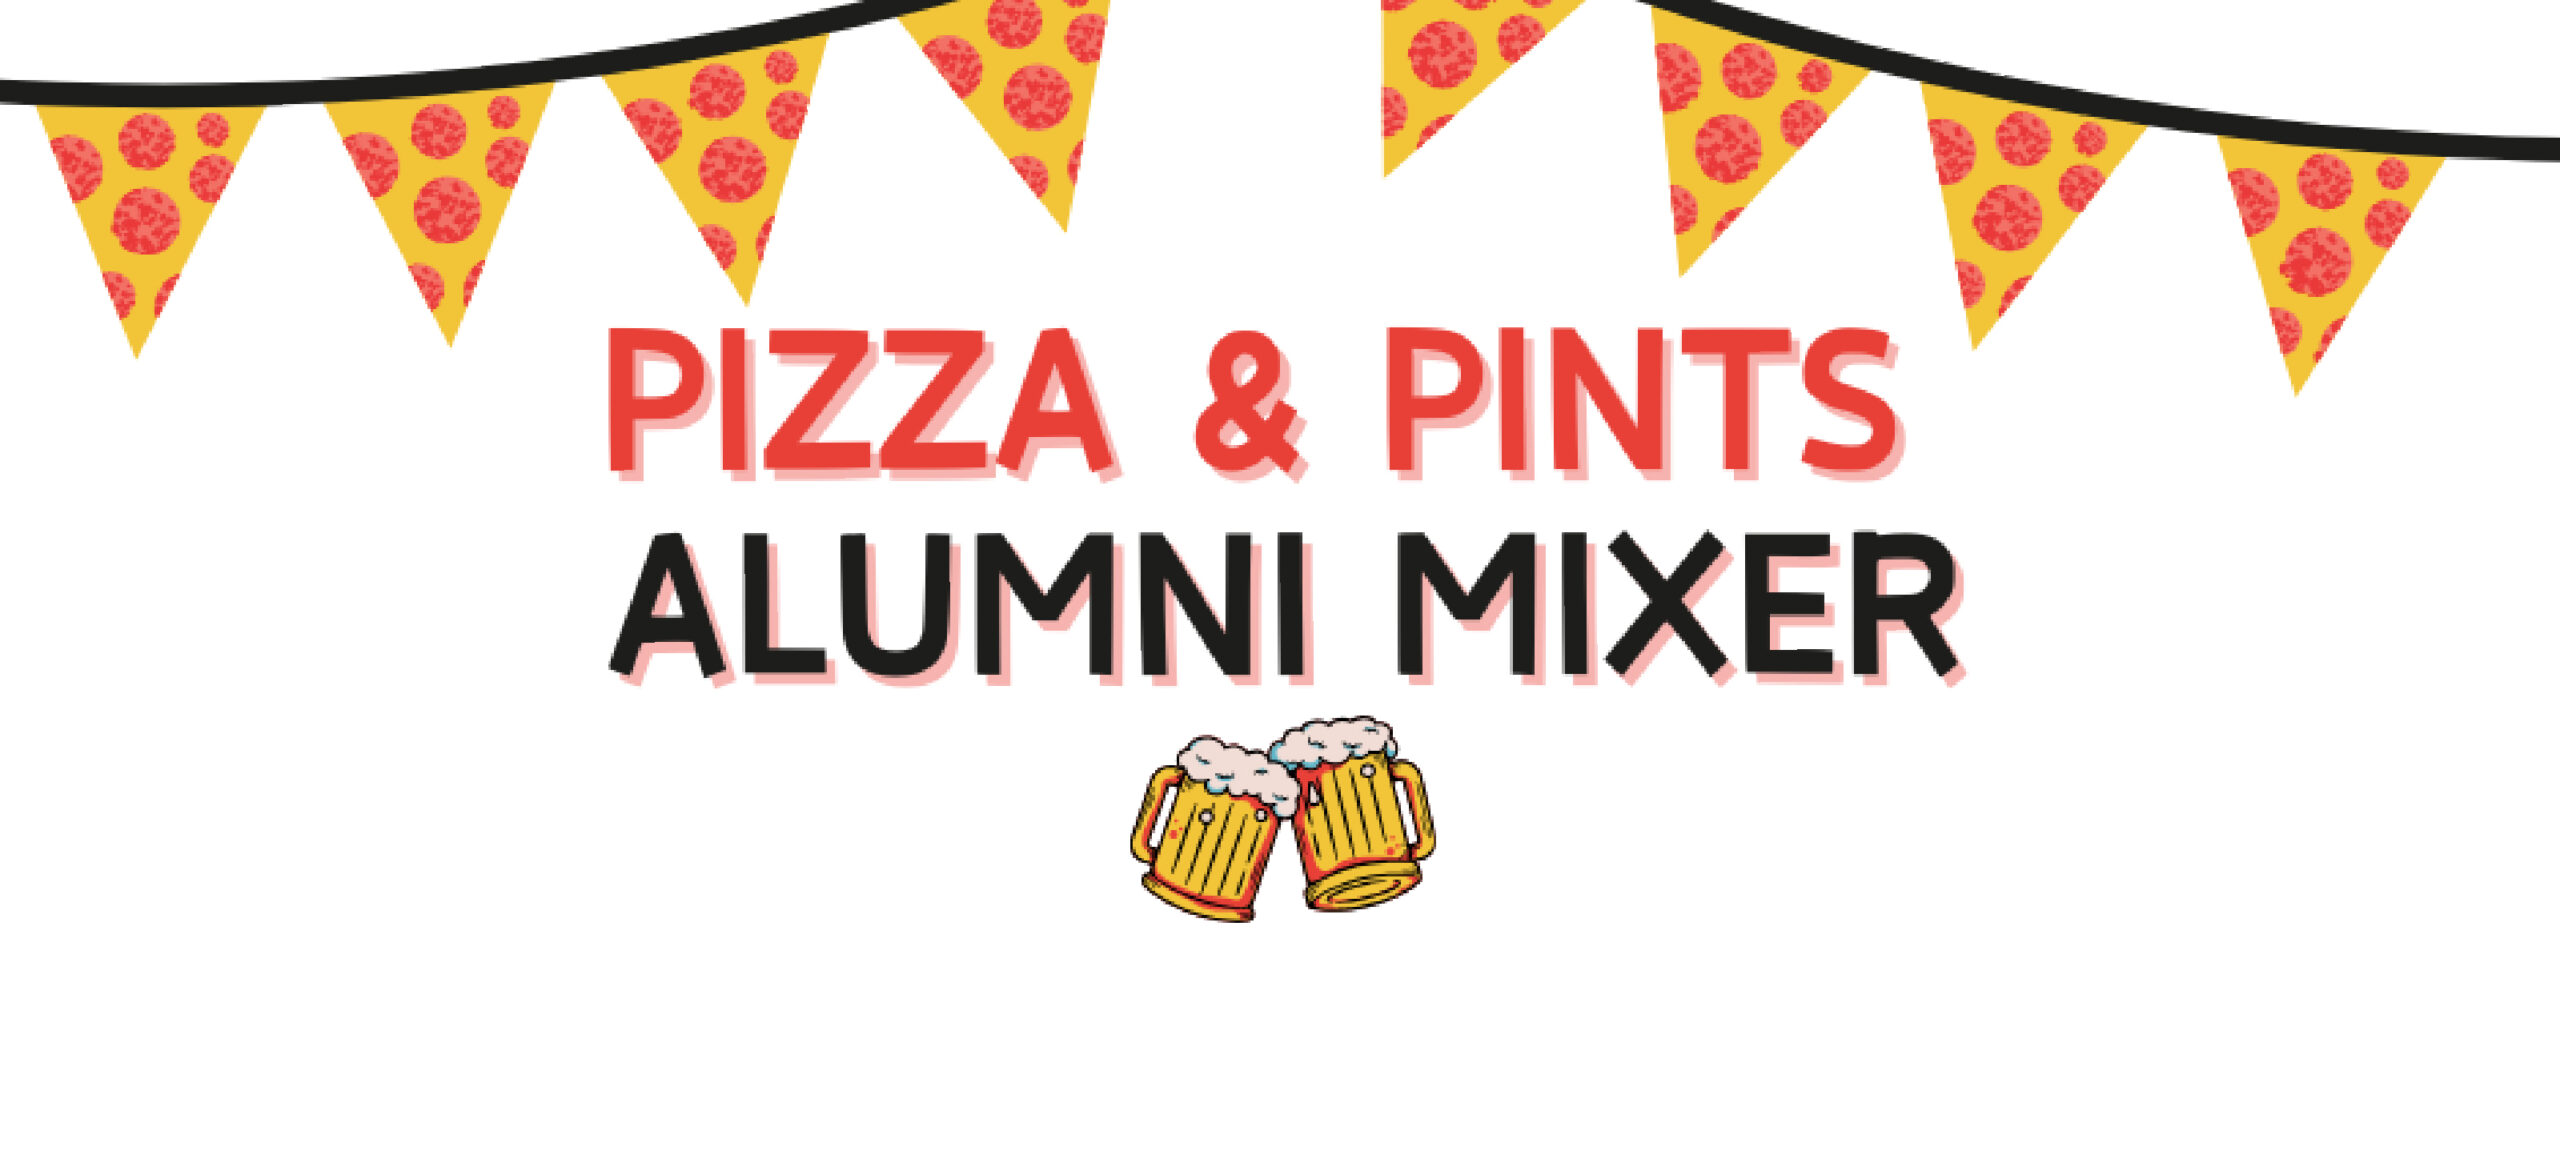 Leadership Lackawanna's Pizza & Pints Alumni Mixer